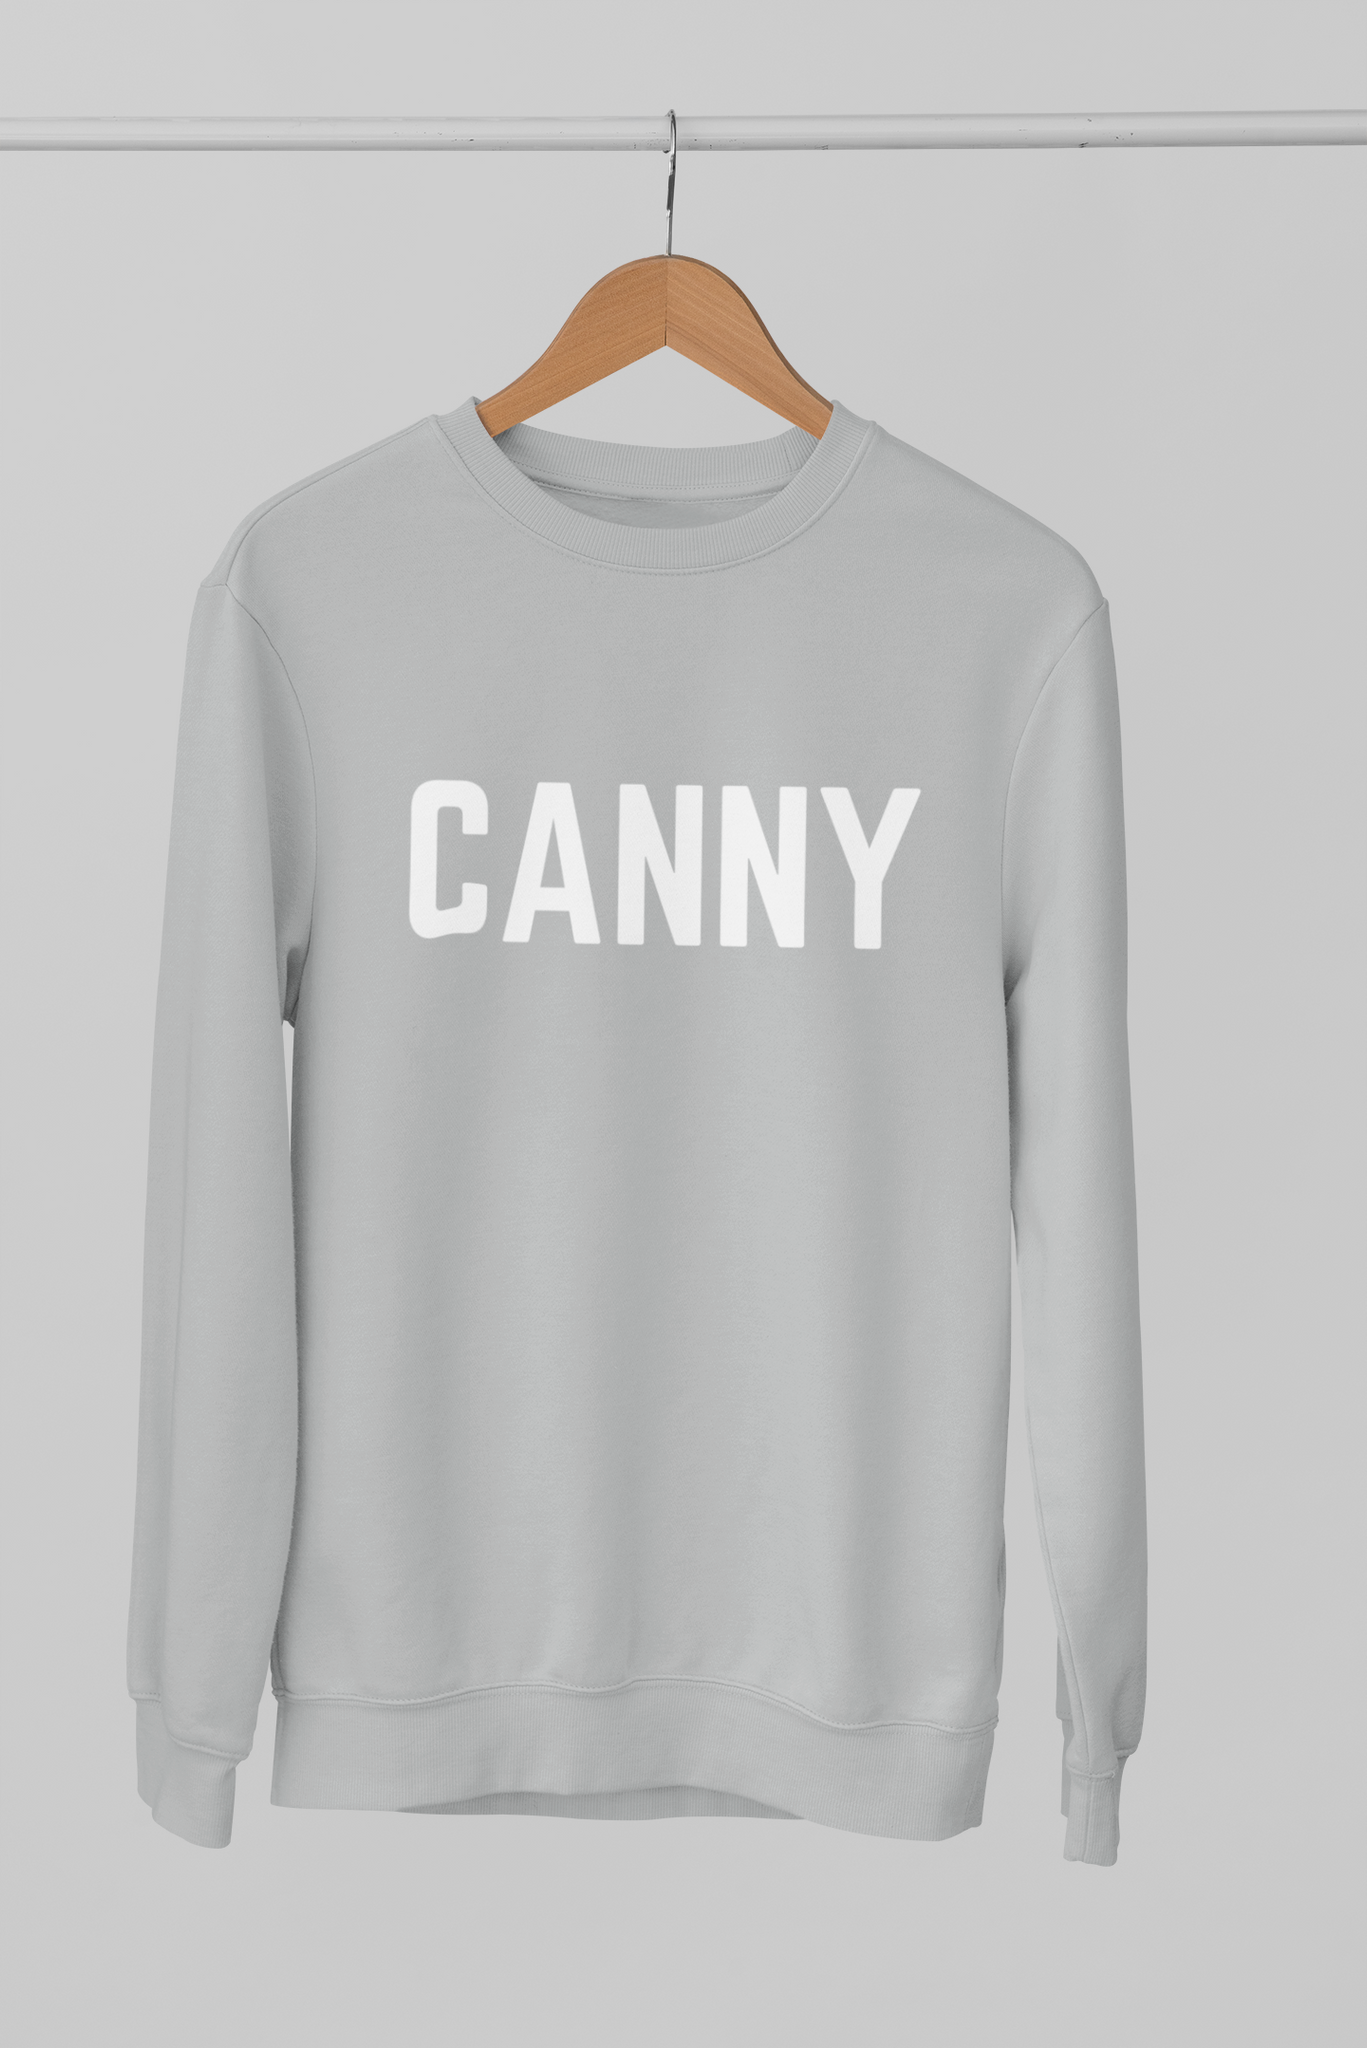 CANNY Sweatshirt Unisex